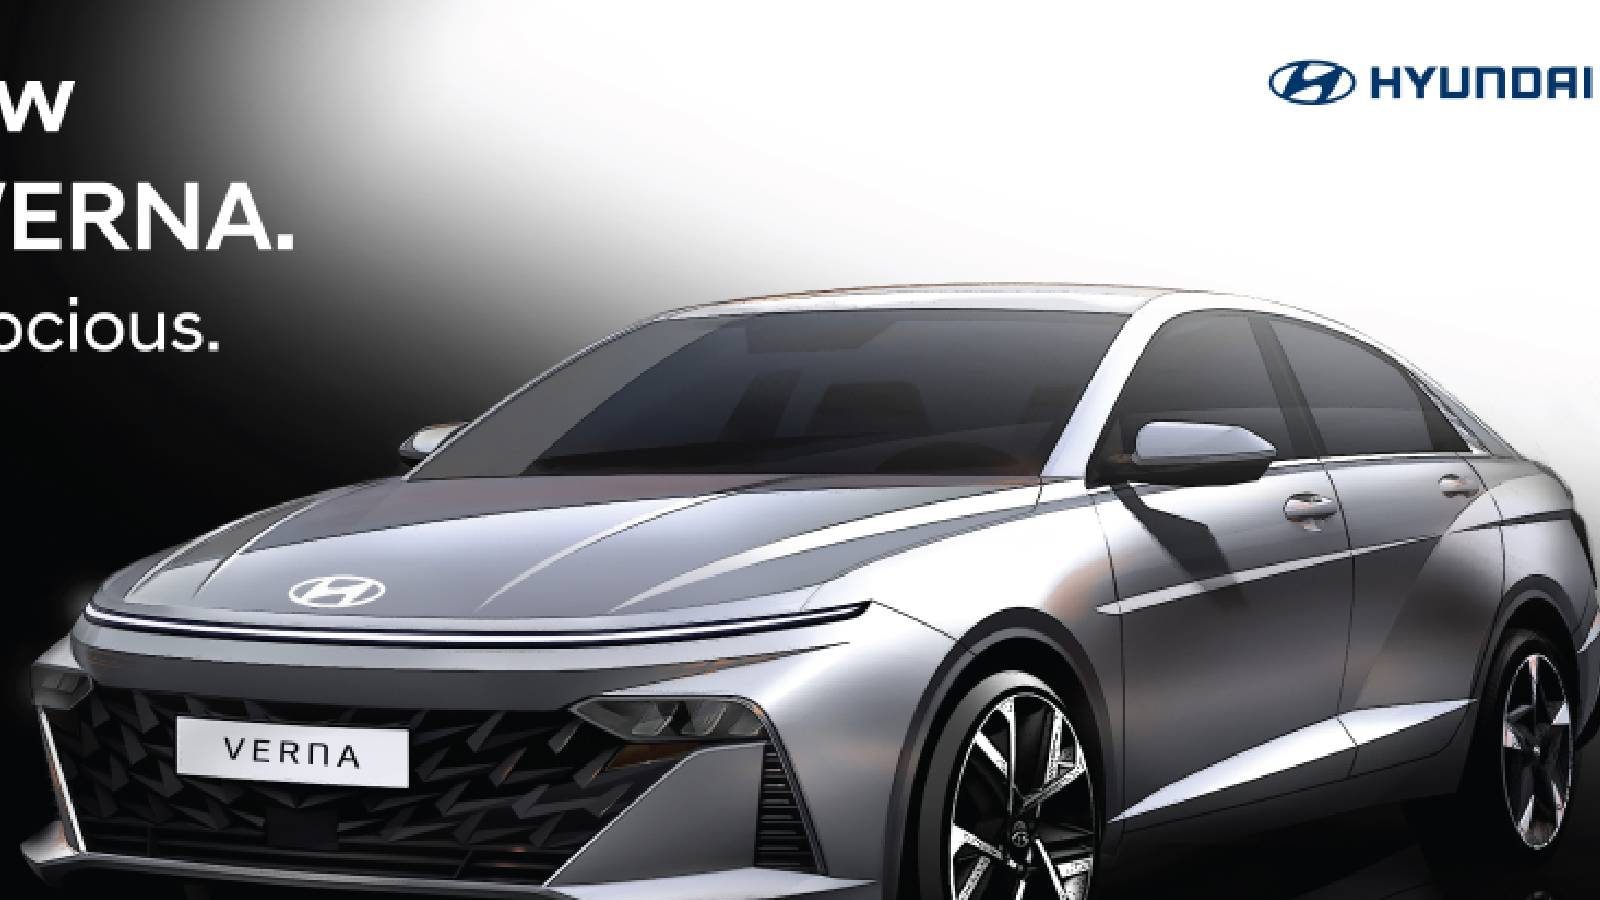 New Look Hyundai Verna 2017 Price, Launch, Interior, Specifications